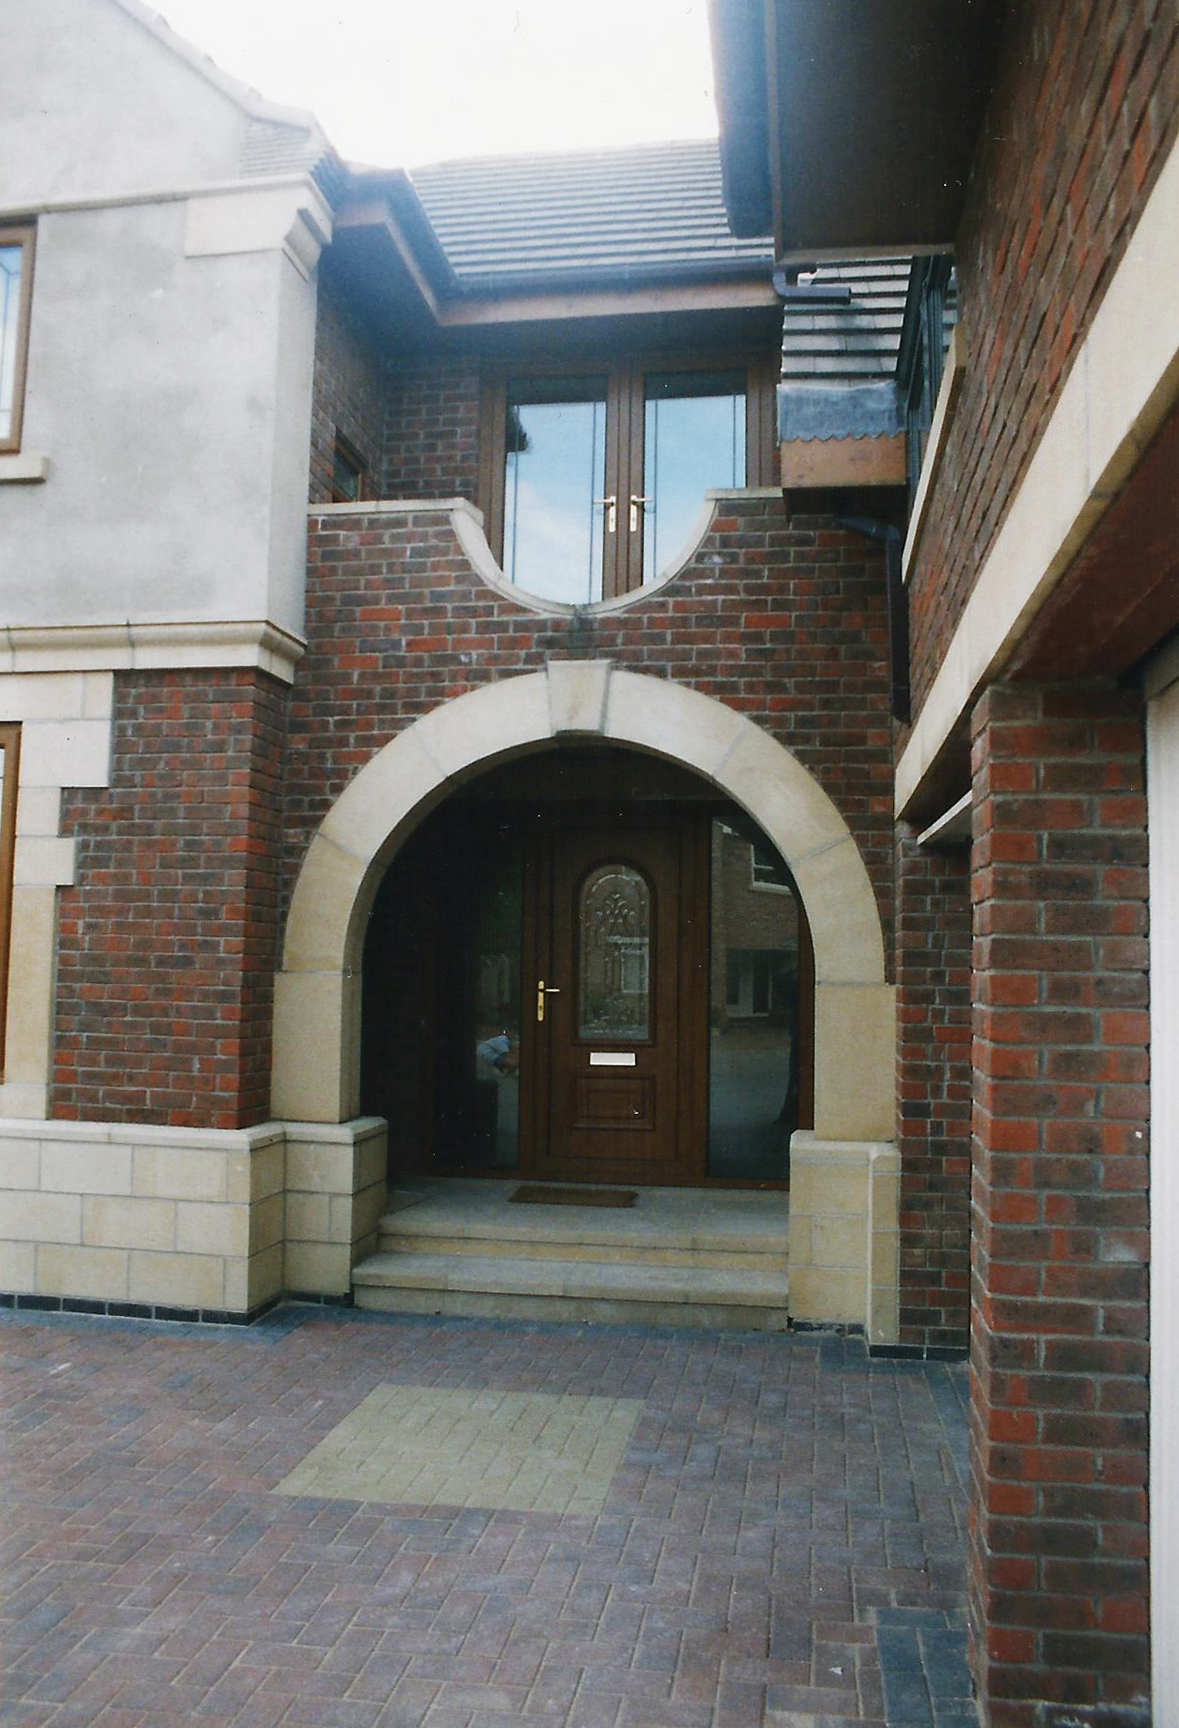 Exterior 4 - Alma Close - Hull Architects - Samuel Kendall Associates